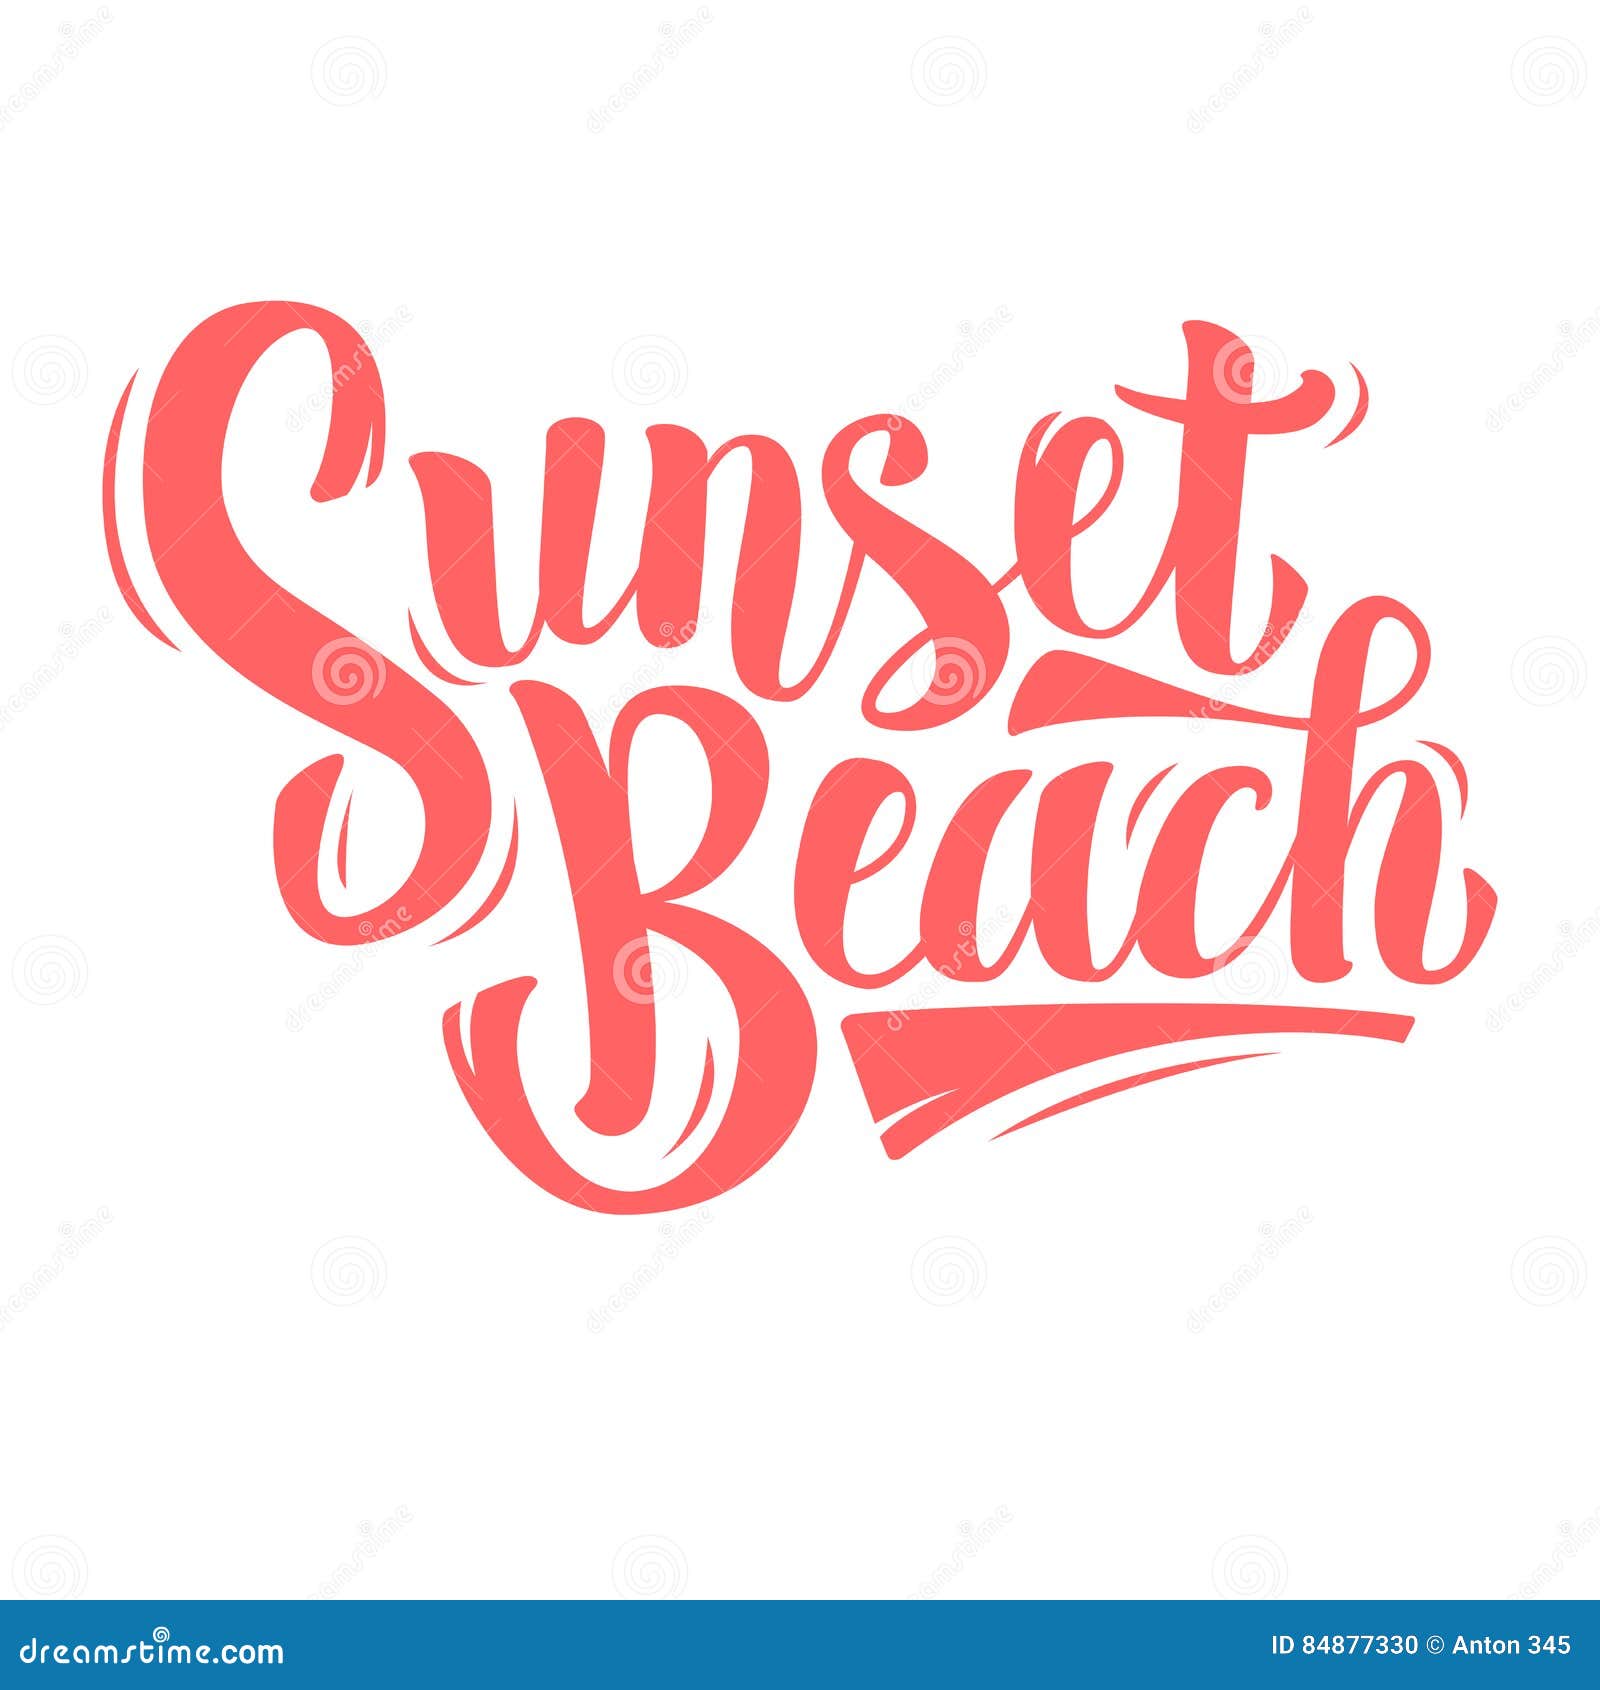 Sunset Beach Brush Script Lettering On A White Background